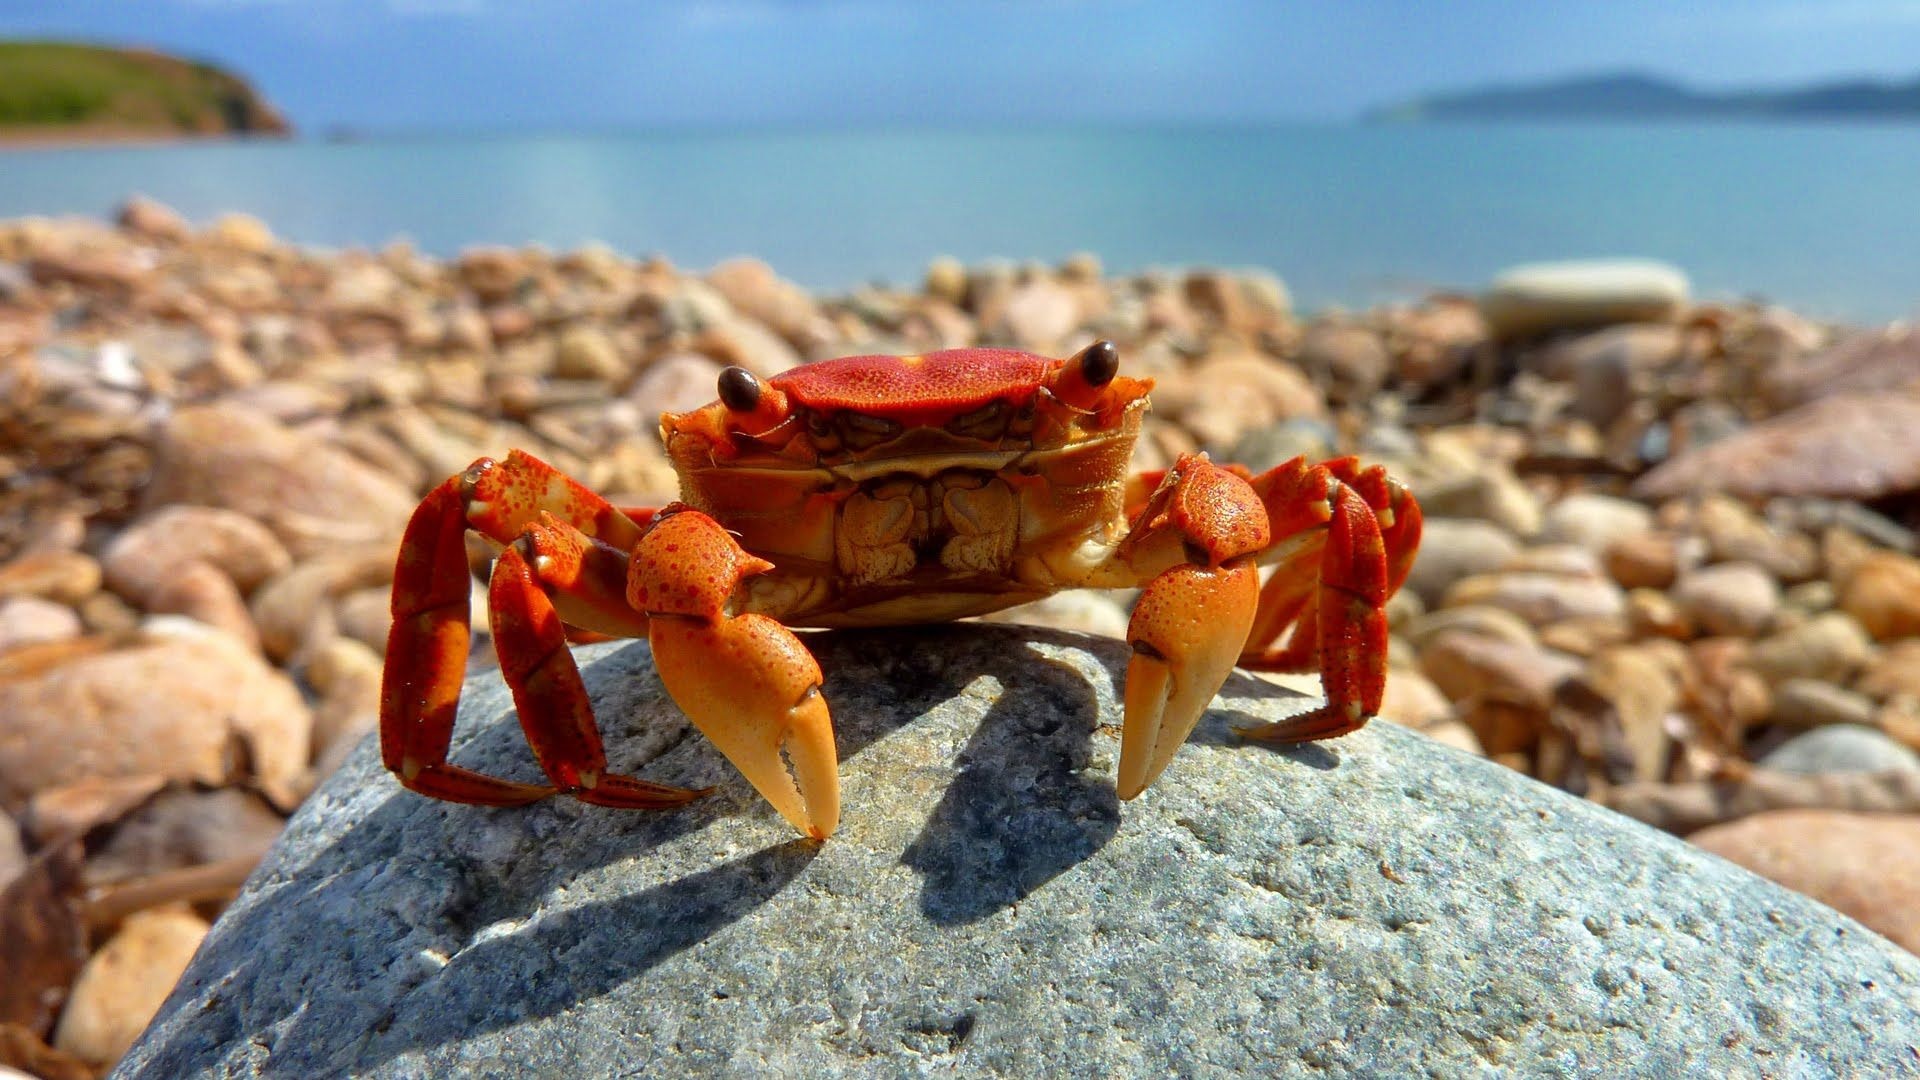 Crab: A subphylum of the arthropods, Invertebrates. 1920x1080 Full HD Background.